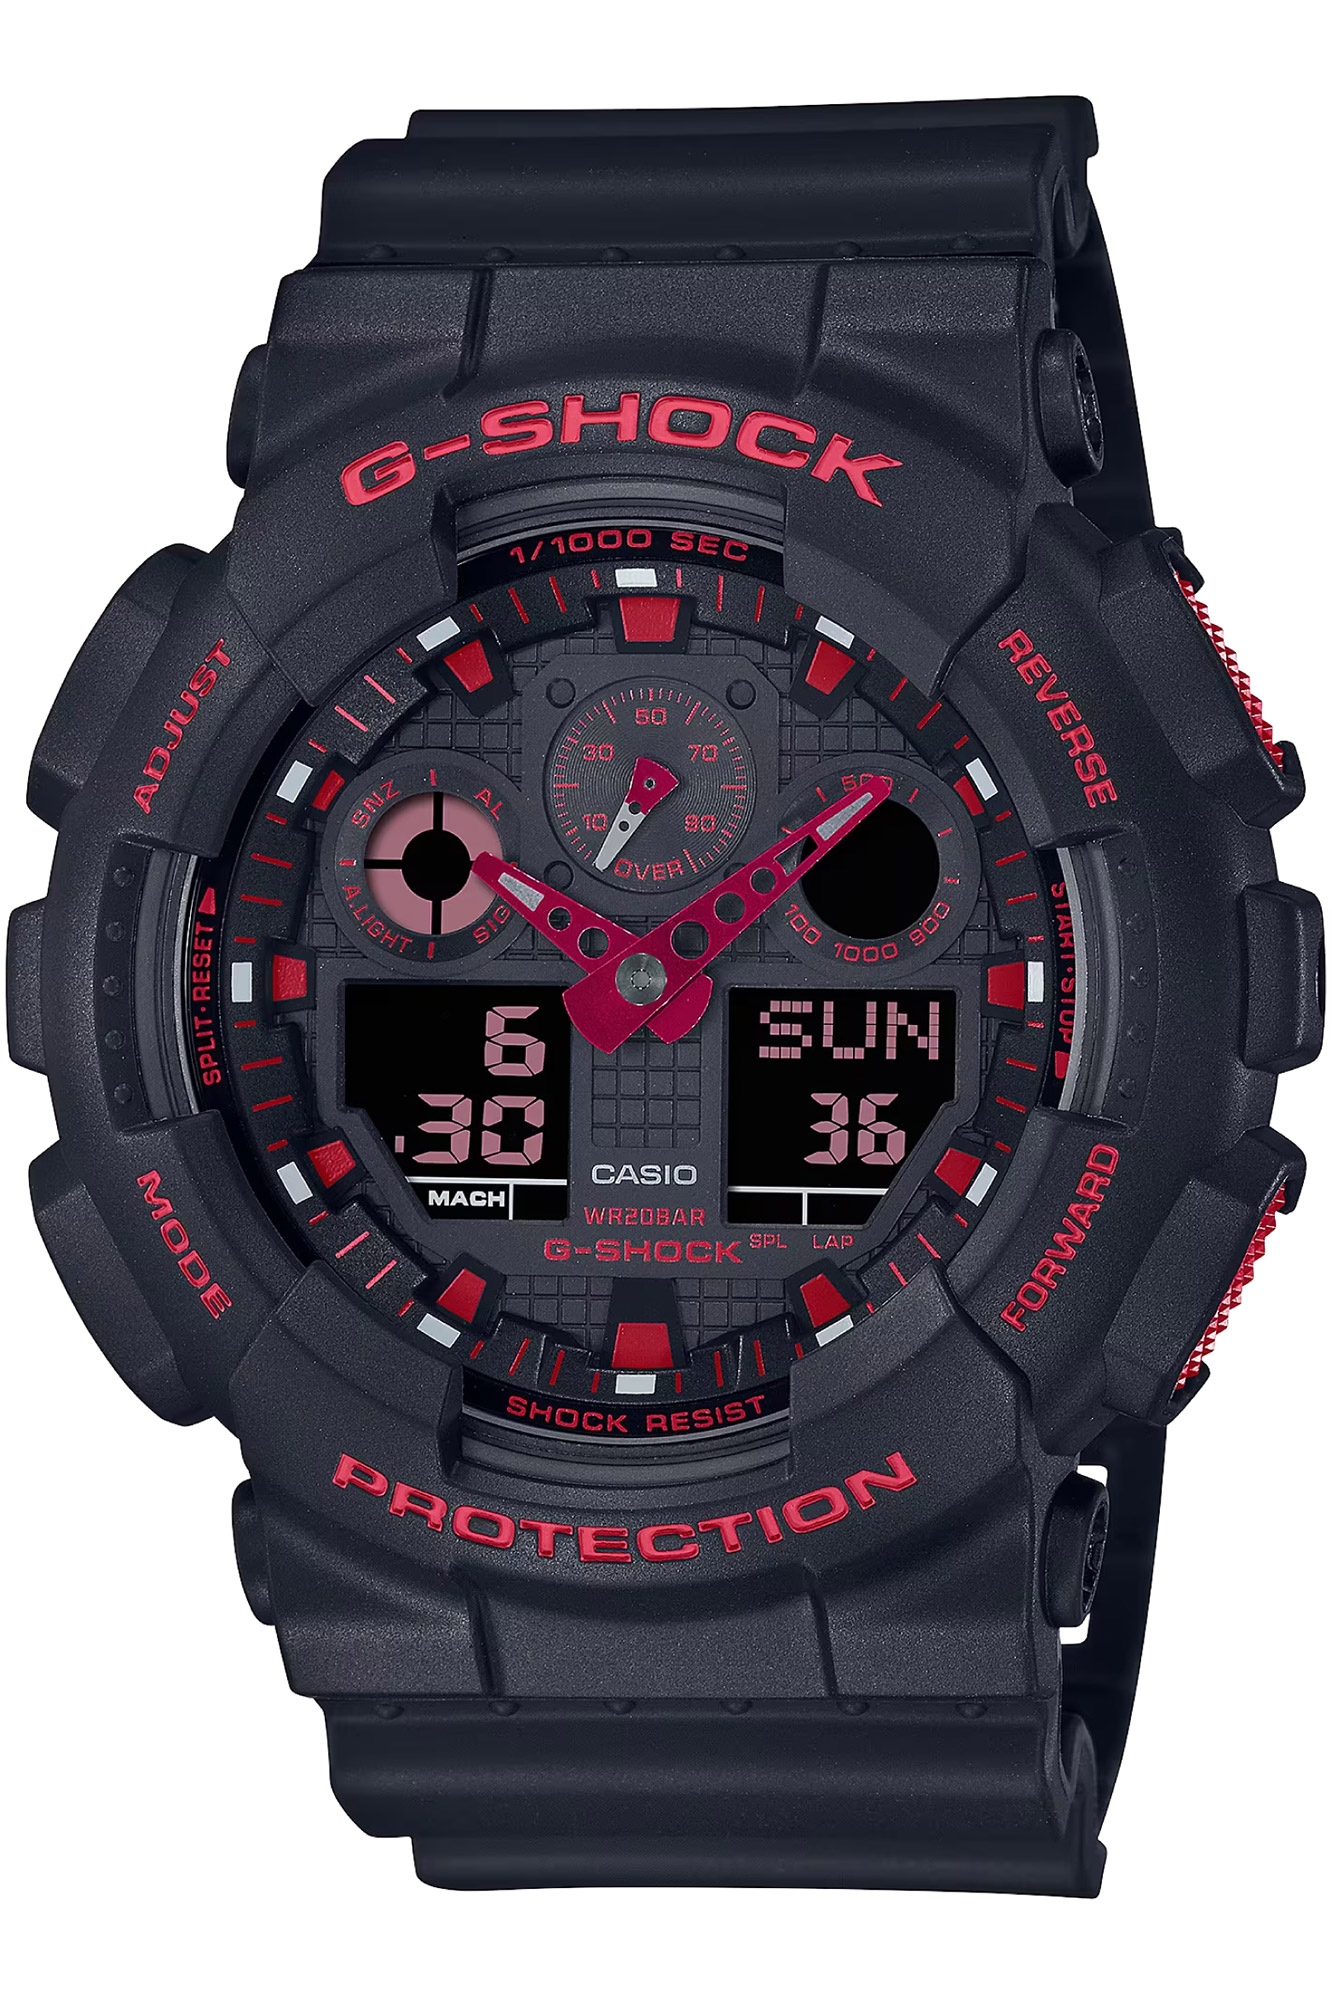 Reloj CASIO G-Shock ga-100bnr-1aer